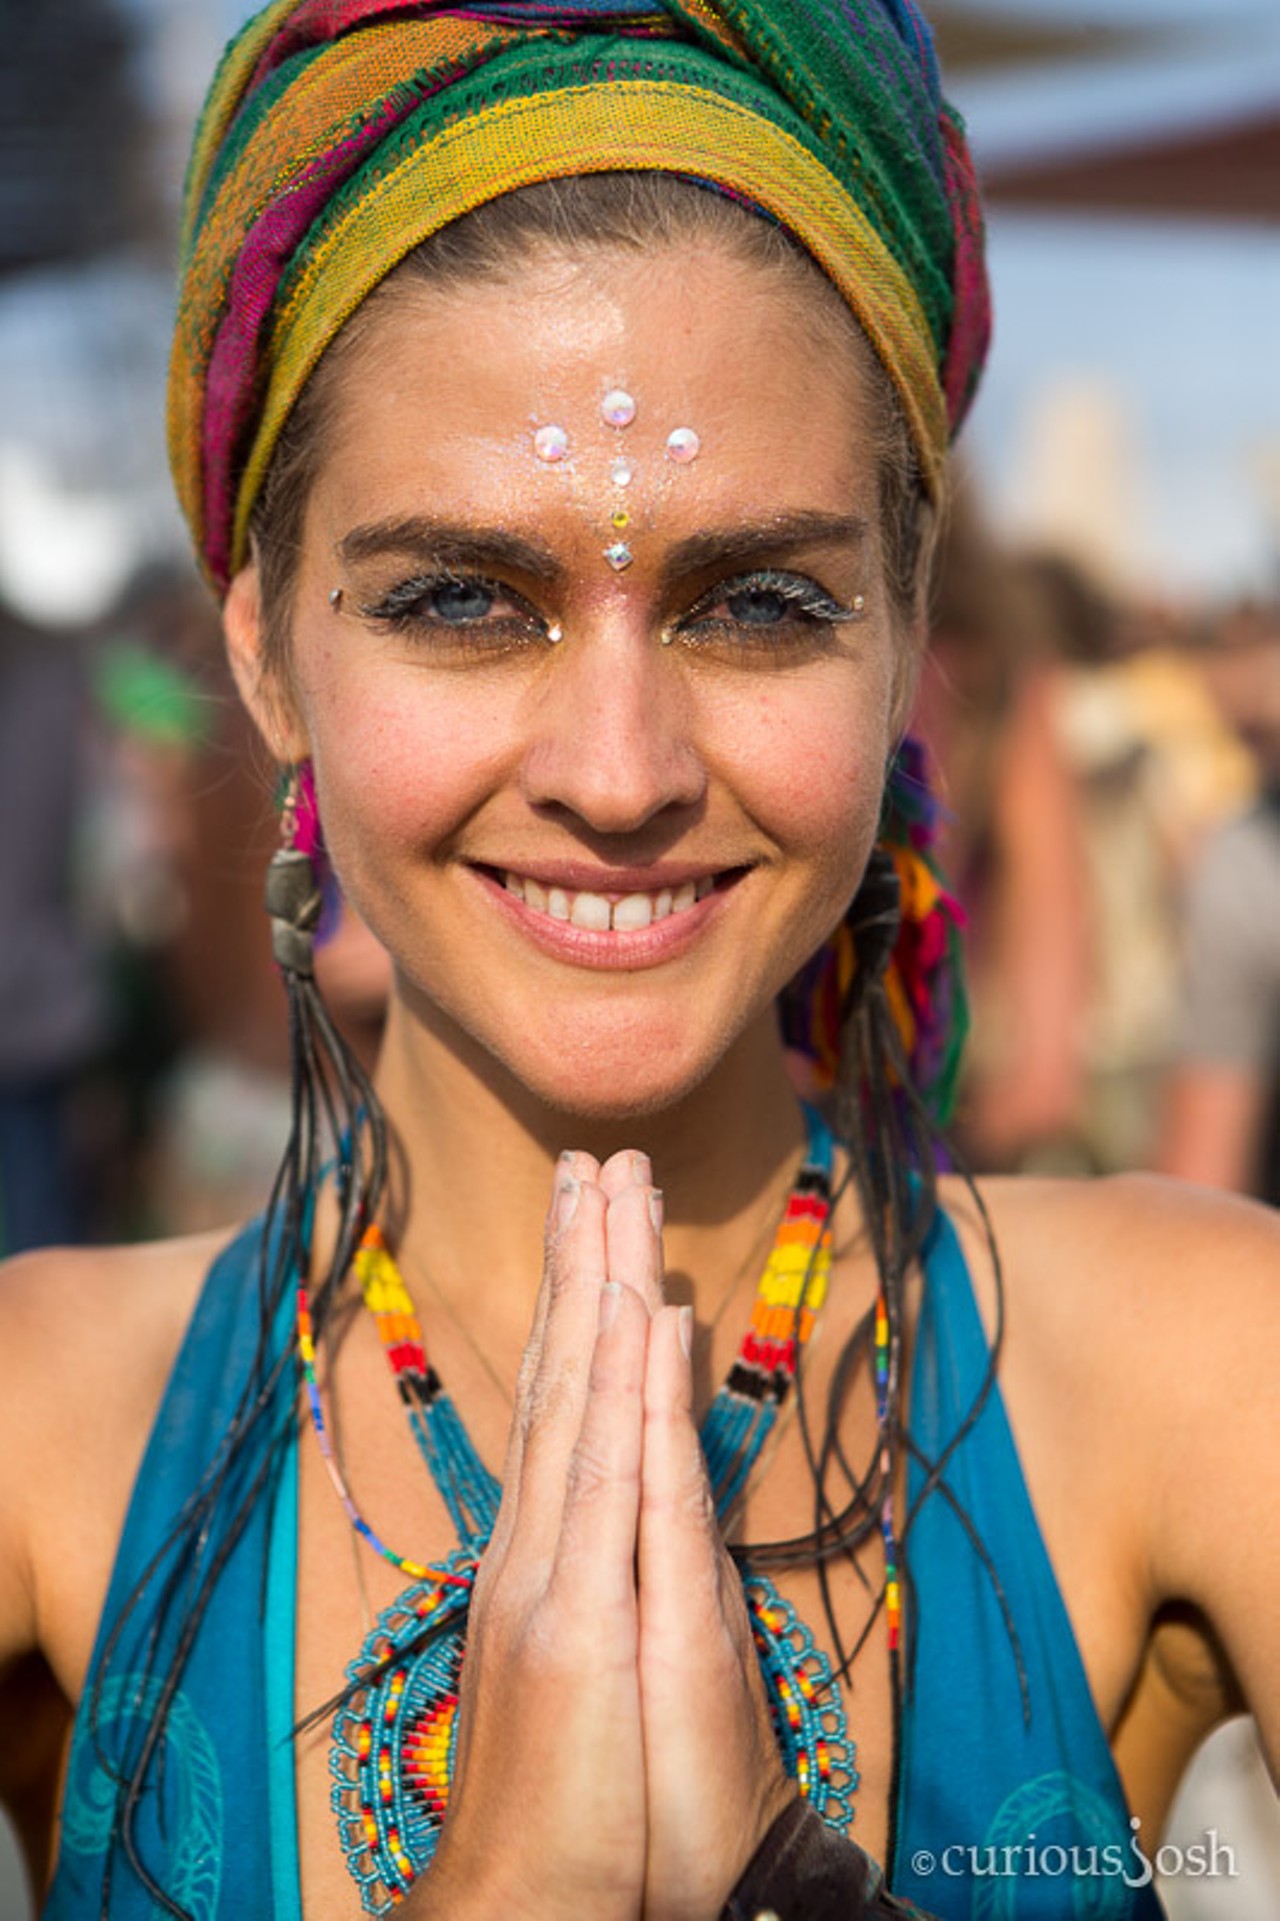 CuriousJosh: The People of Burning Man 2013